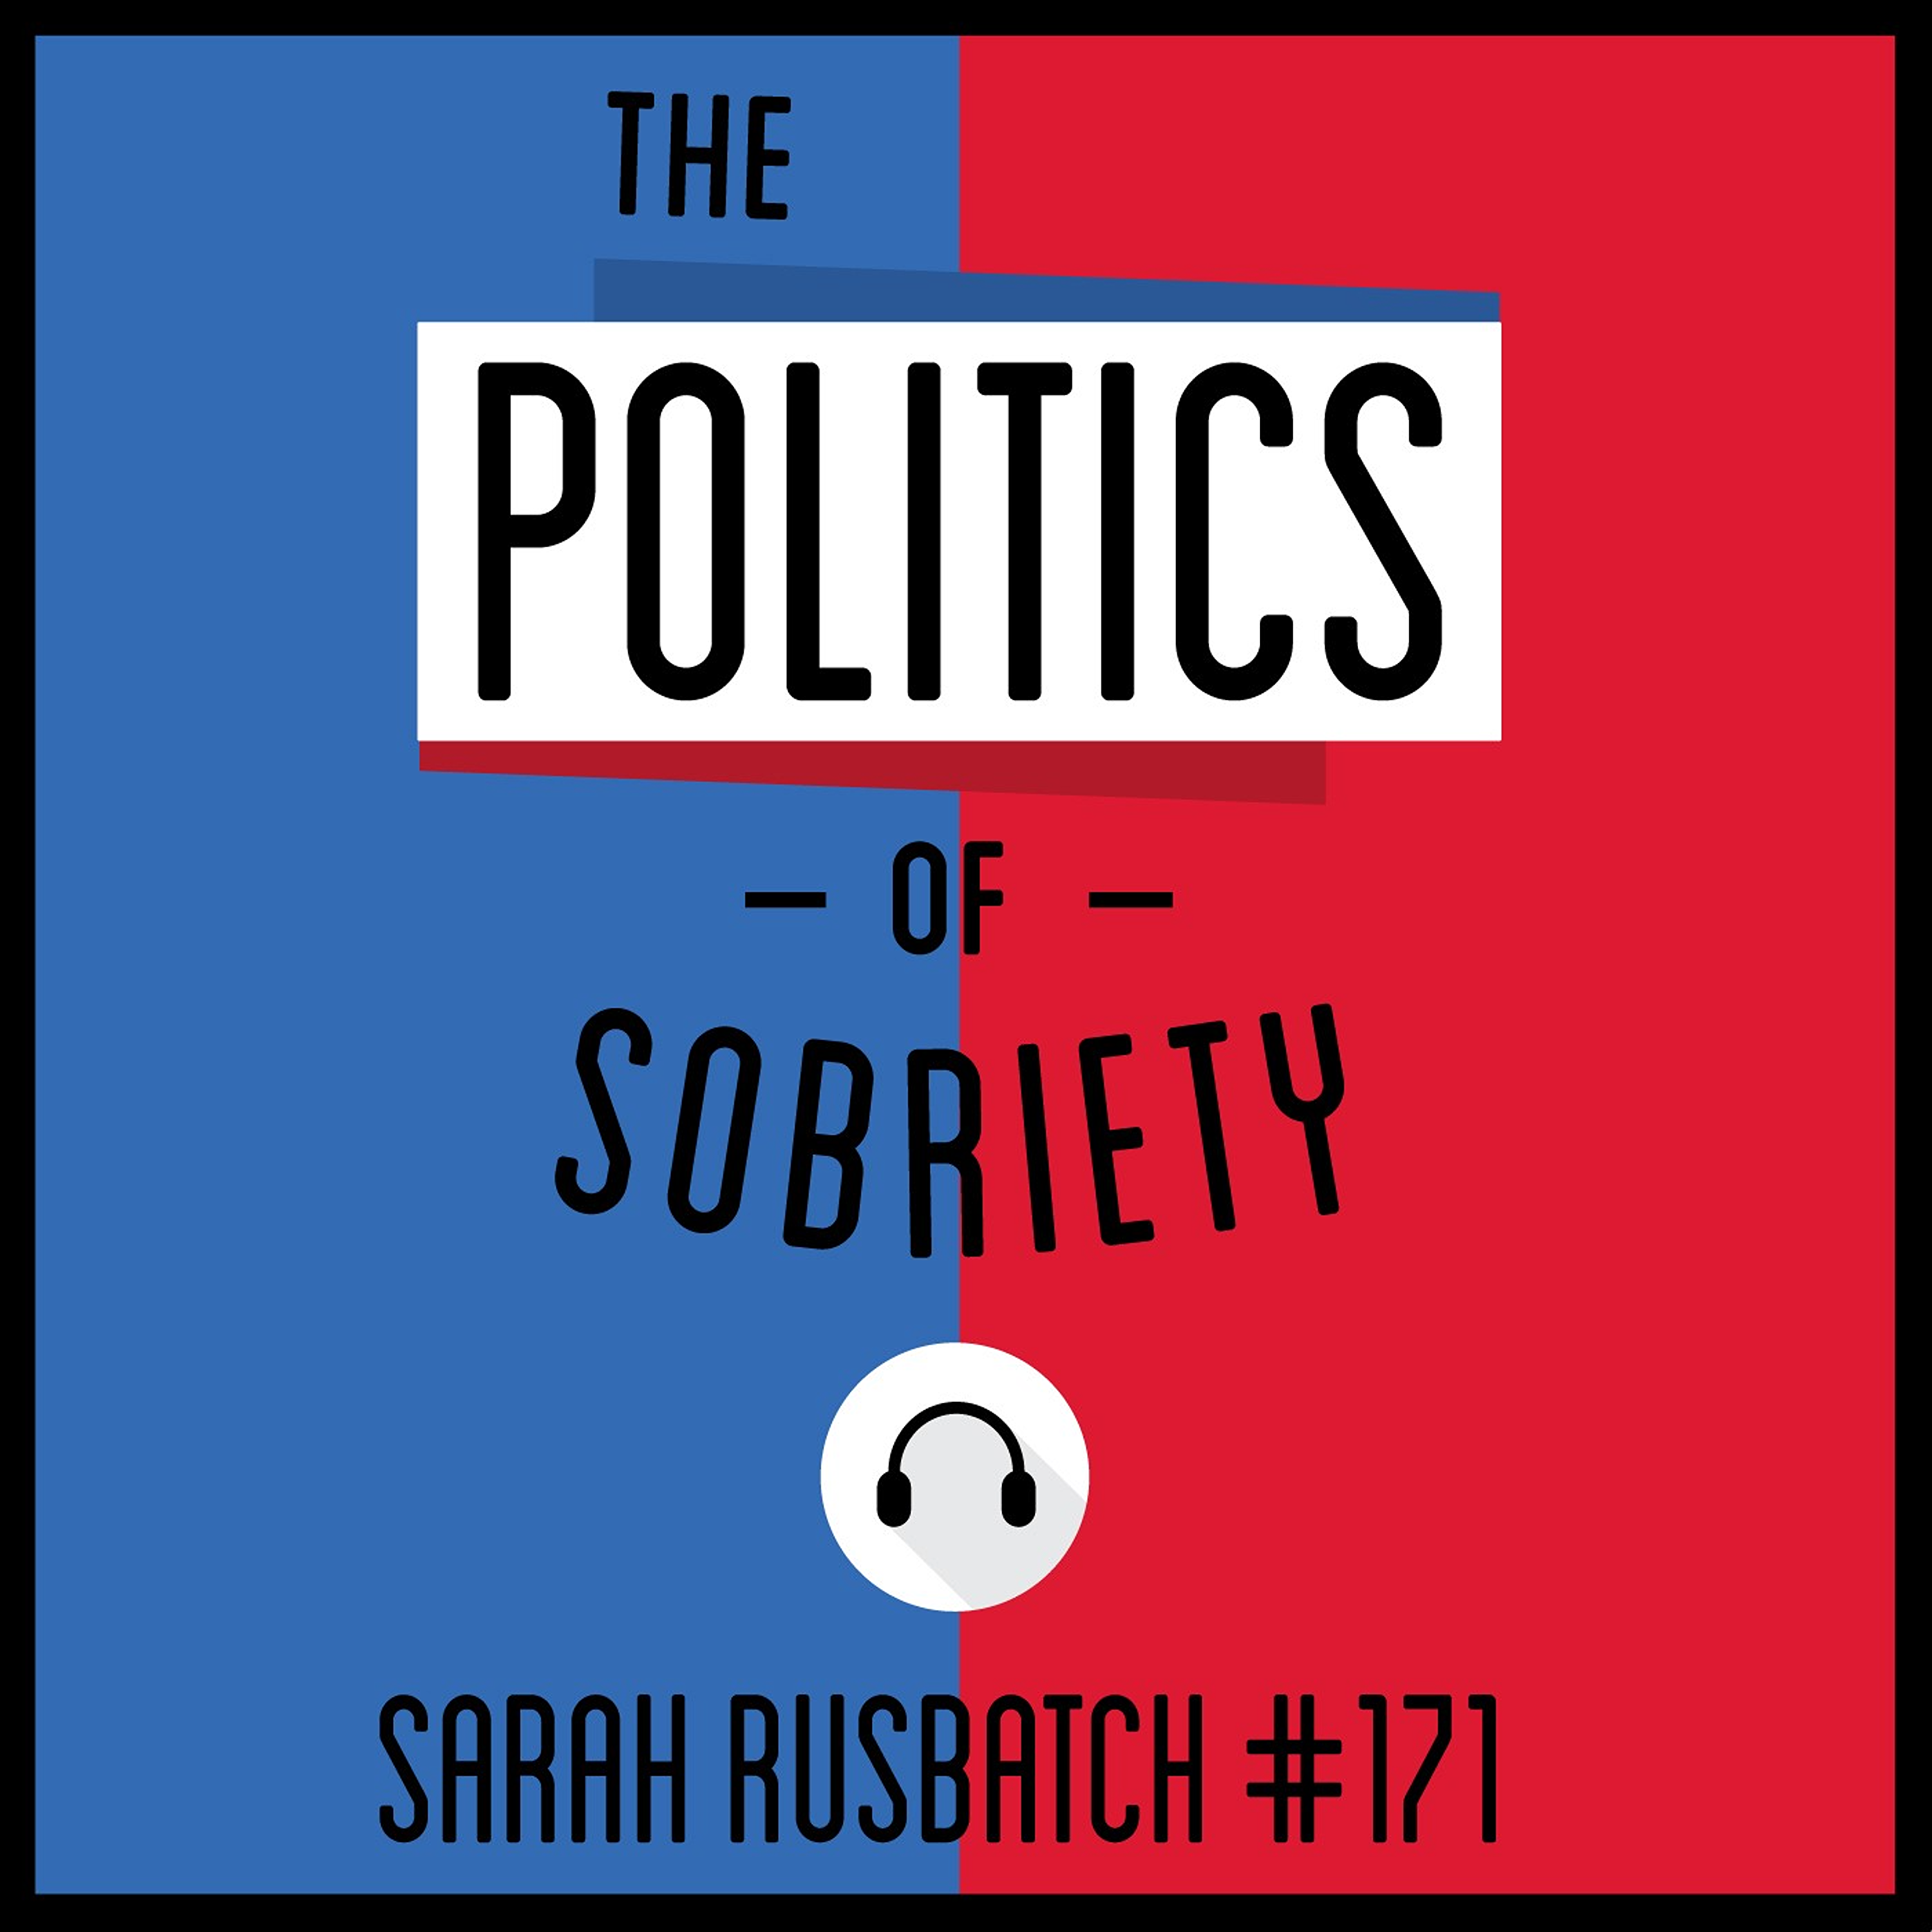 171: The Politics of Sobriety - Sarah Rusbatch